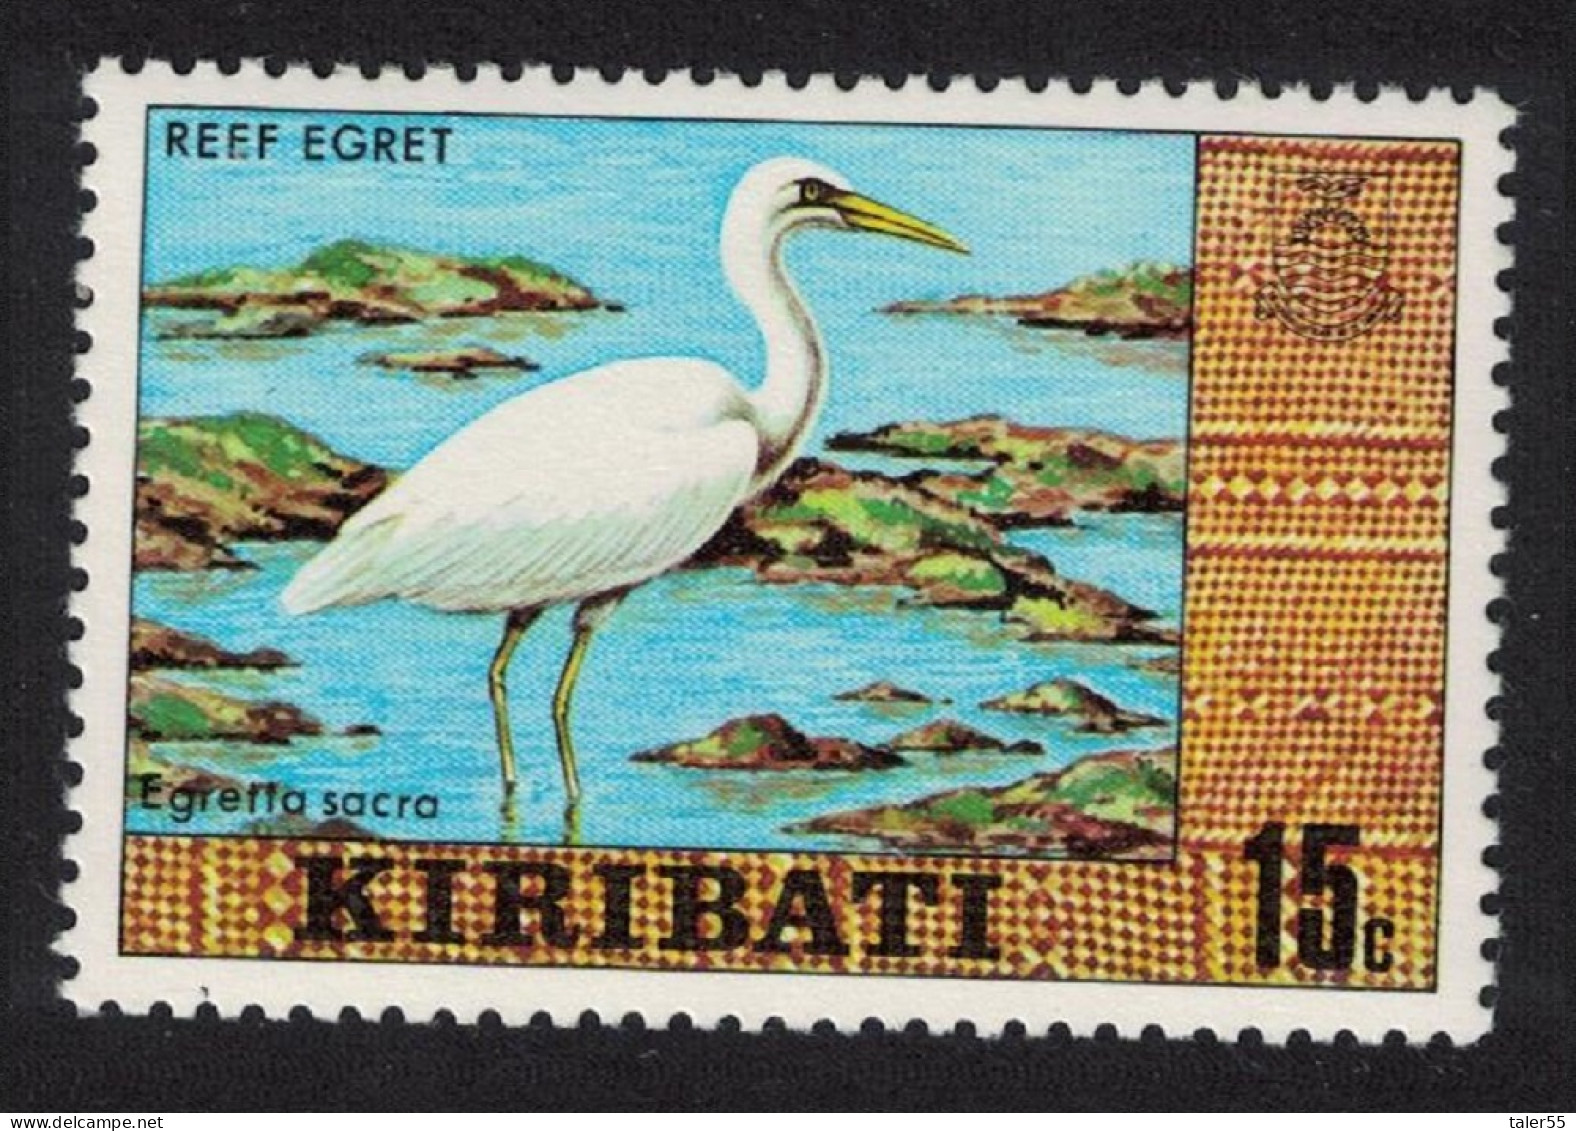 Kiribati Reef Heron Bird 15c 1980 MNH SG#127 - Kiribati (1979-...)